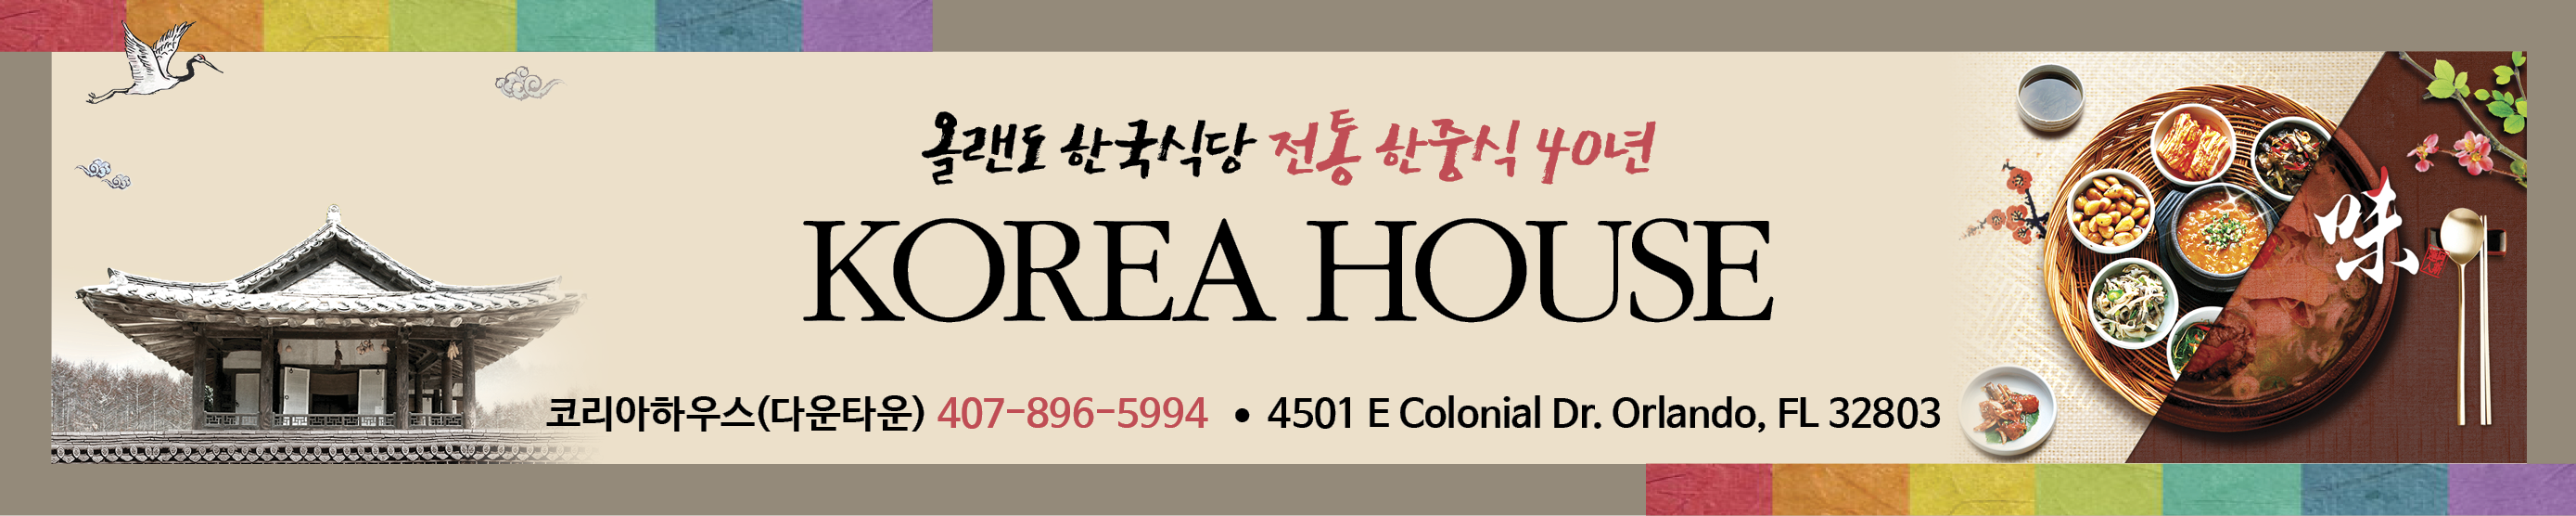 Korea House Ad